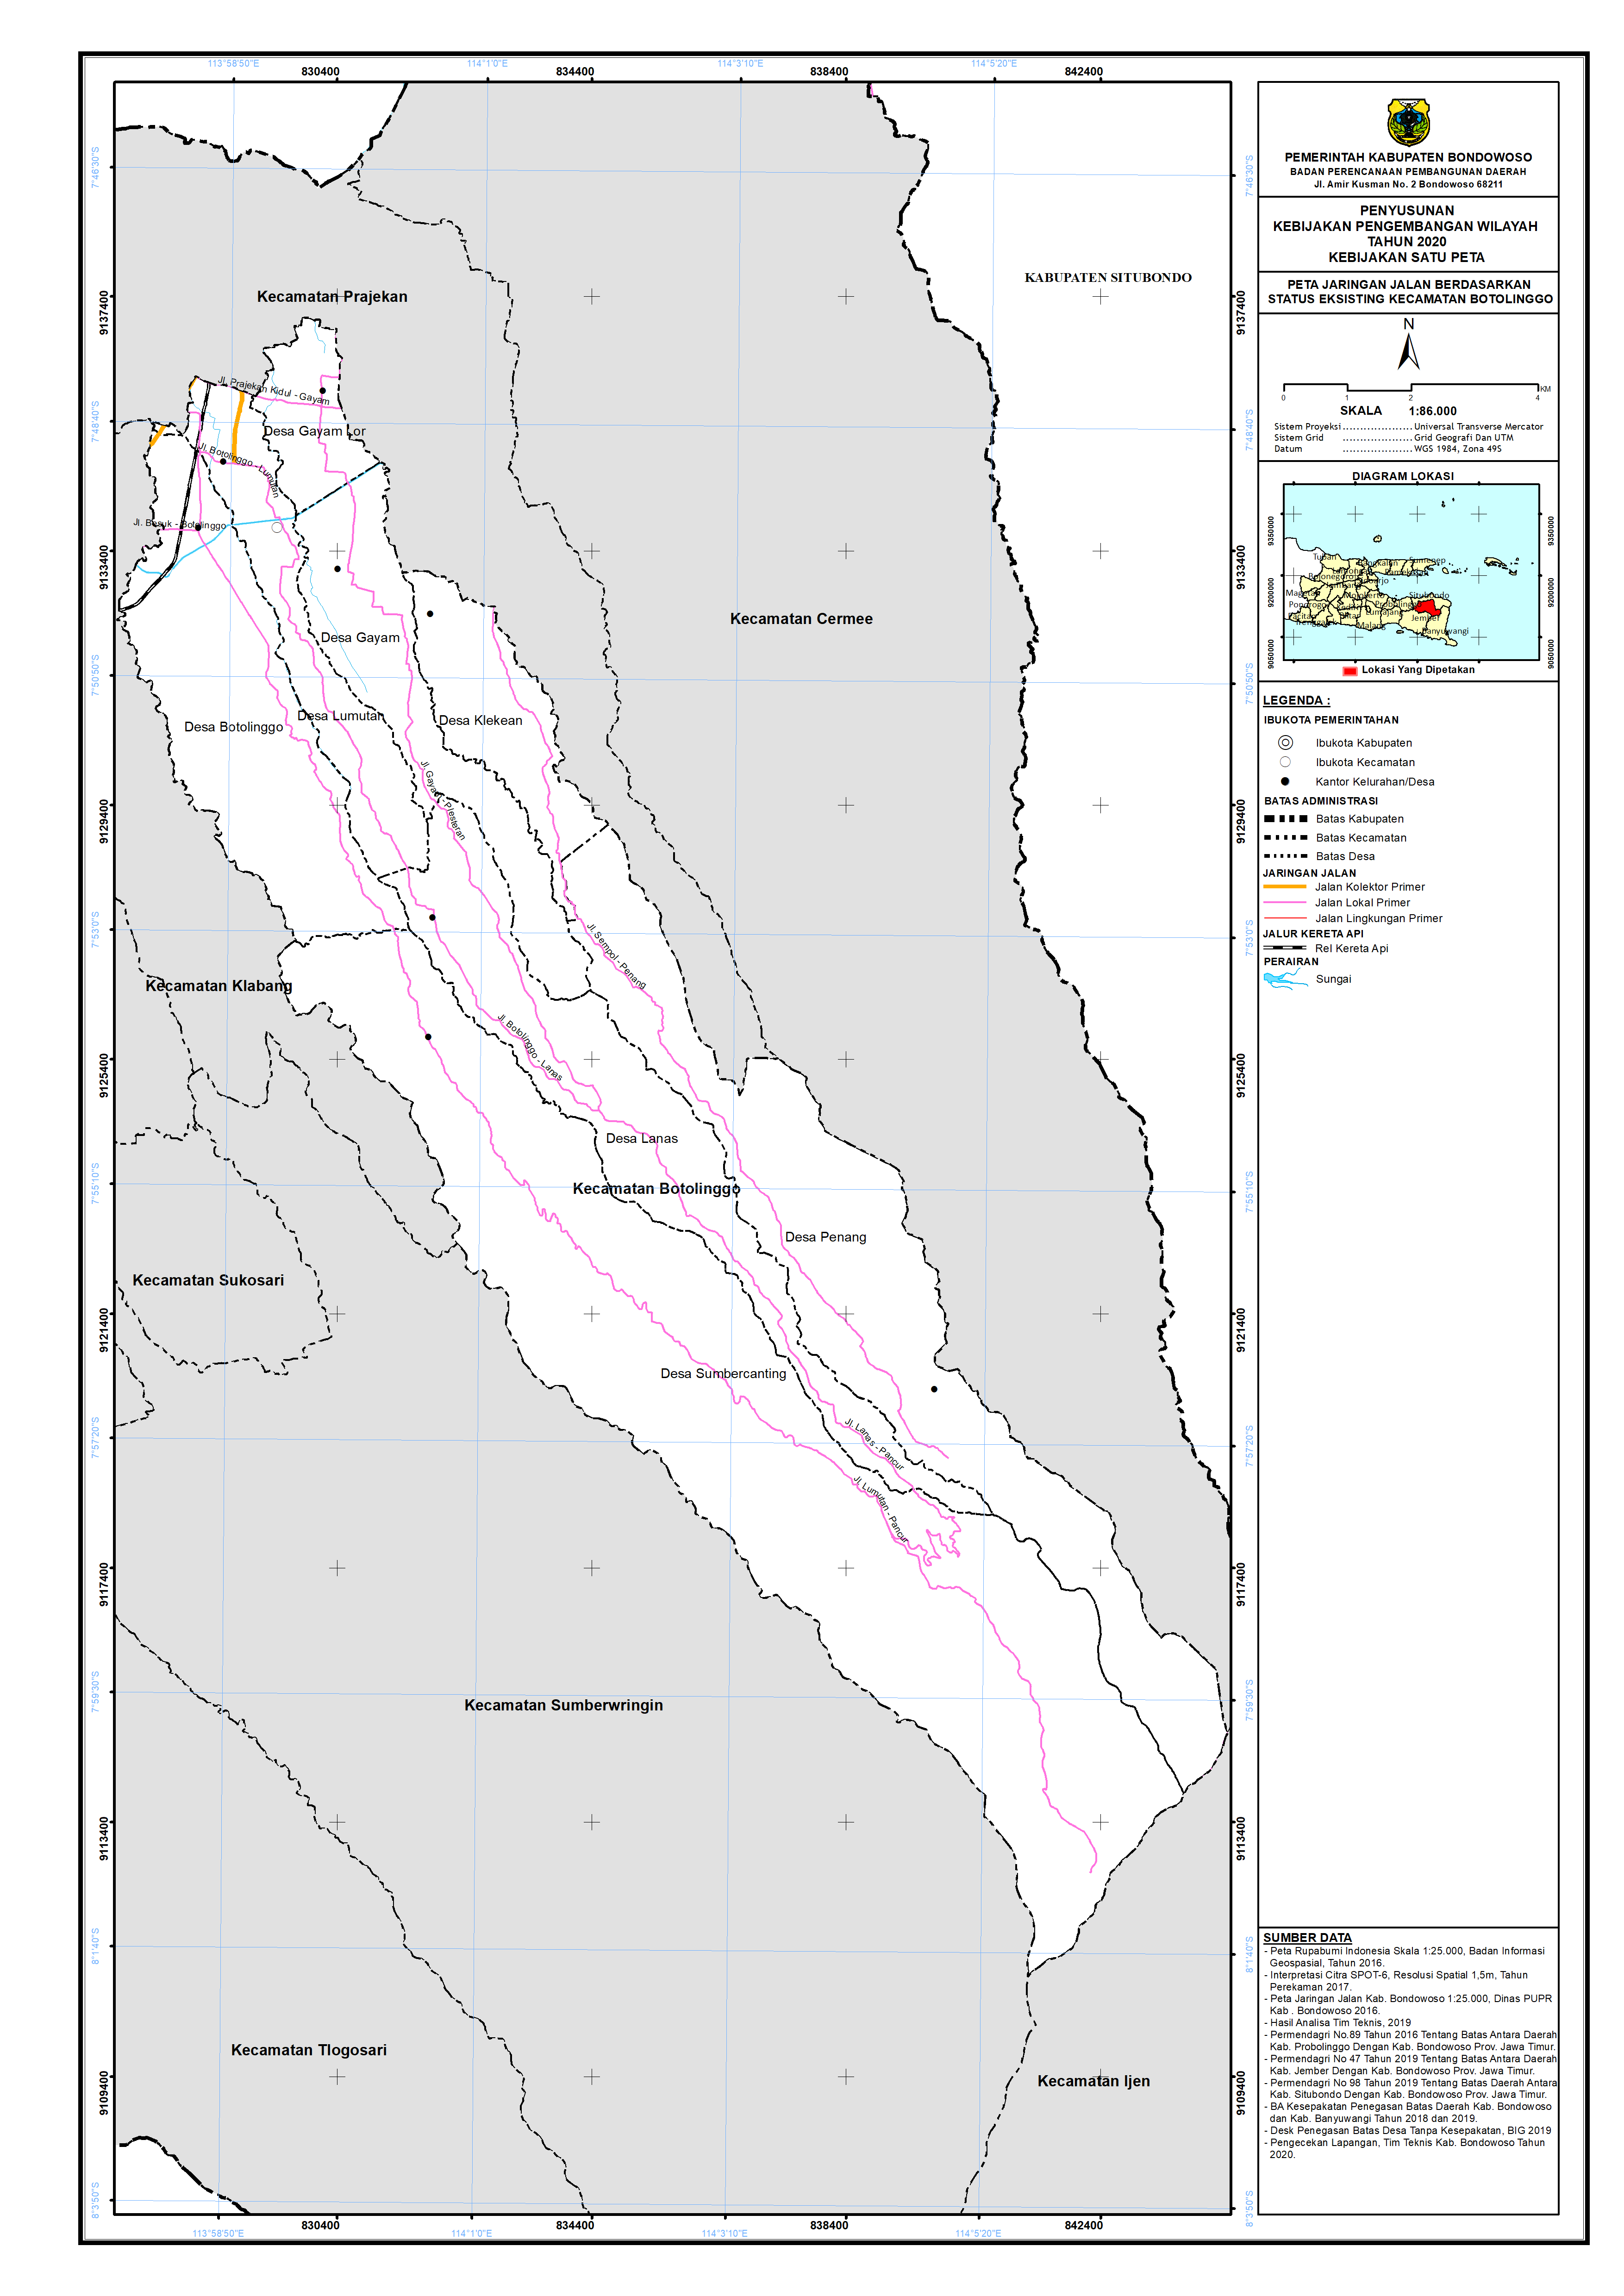 Peta Jaringan Jalan Berdasarkan Status Eksisting Kecamatan Botolinggo.png